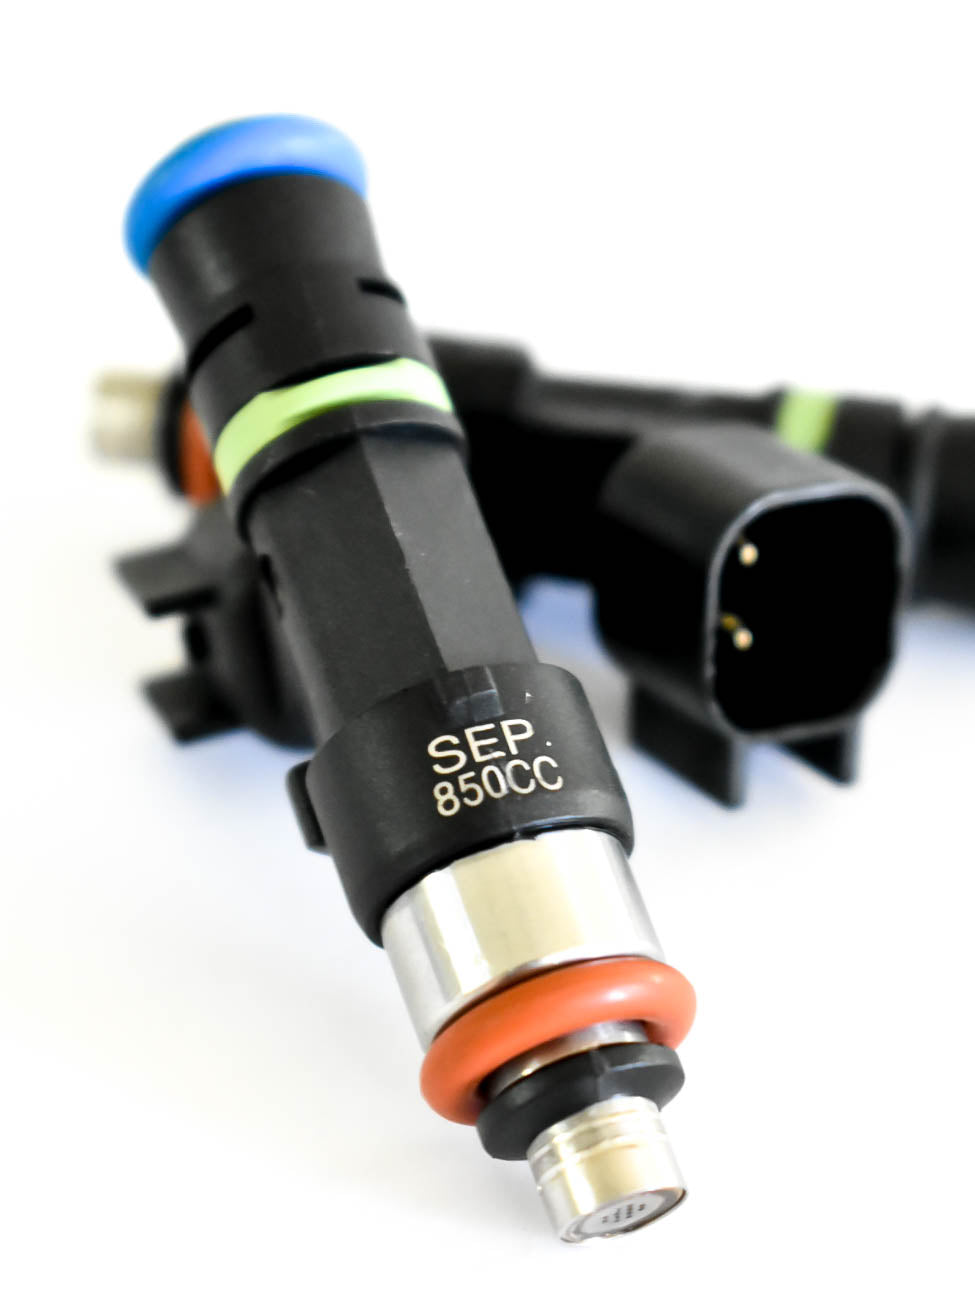 SEP - "Medium" LS2 Style - EV6 (USCAR) plug - 850cc/min, 80lb/hr@43PSI Injectors